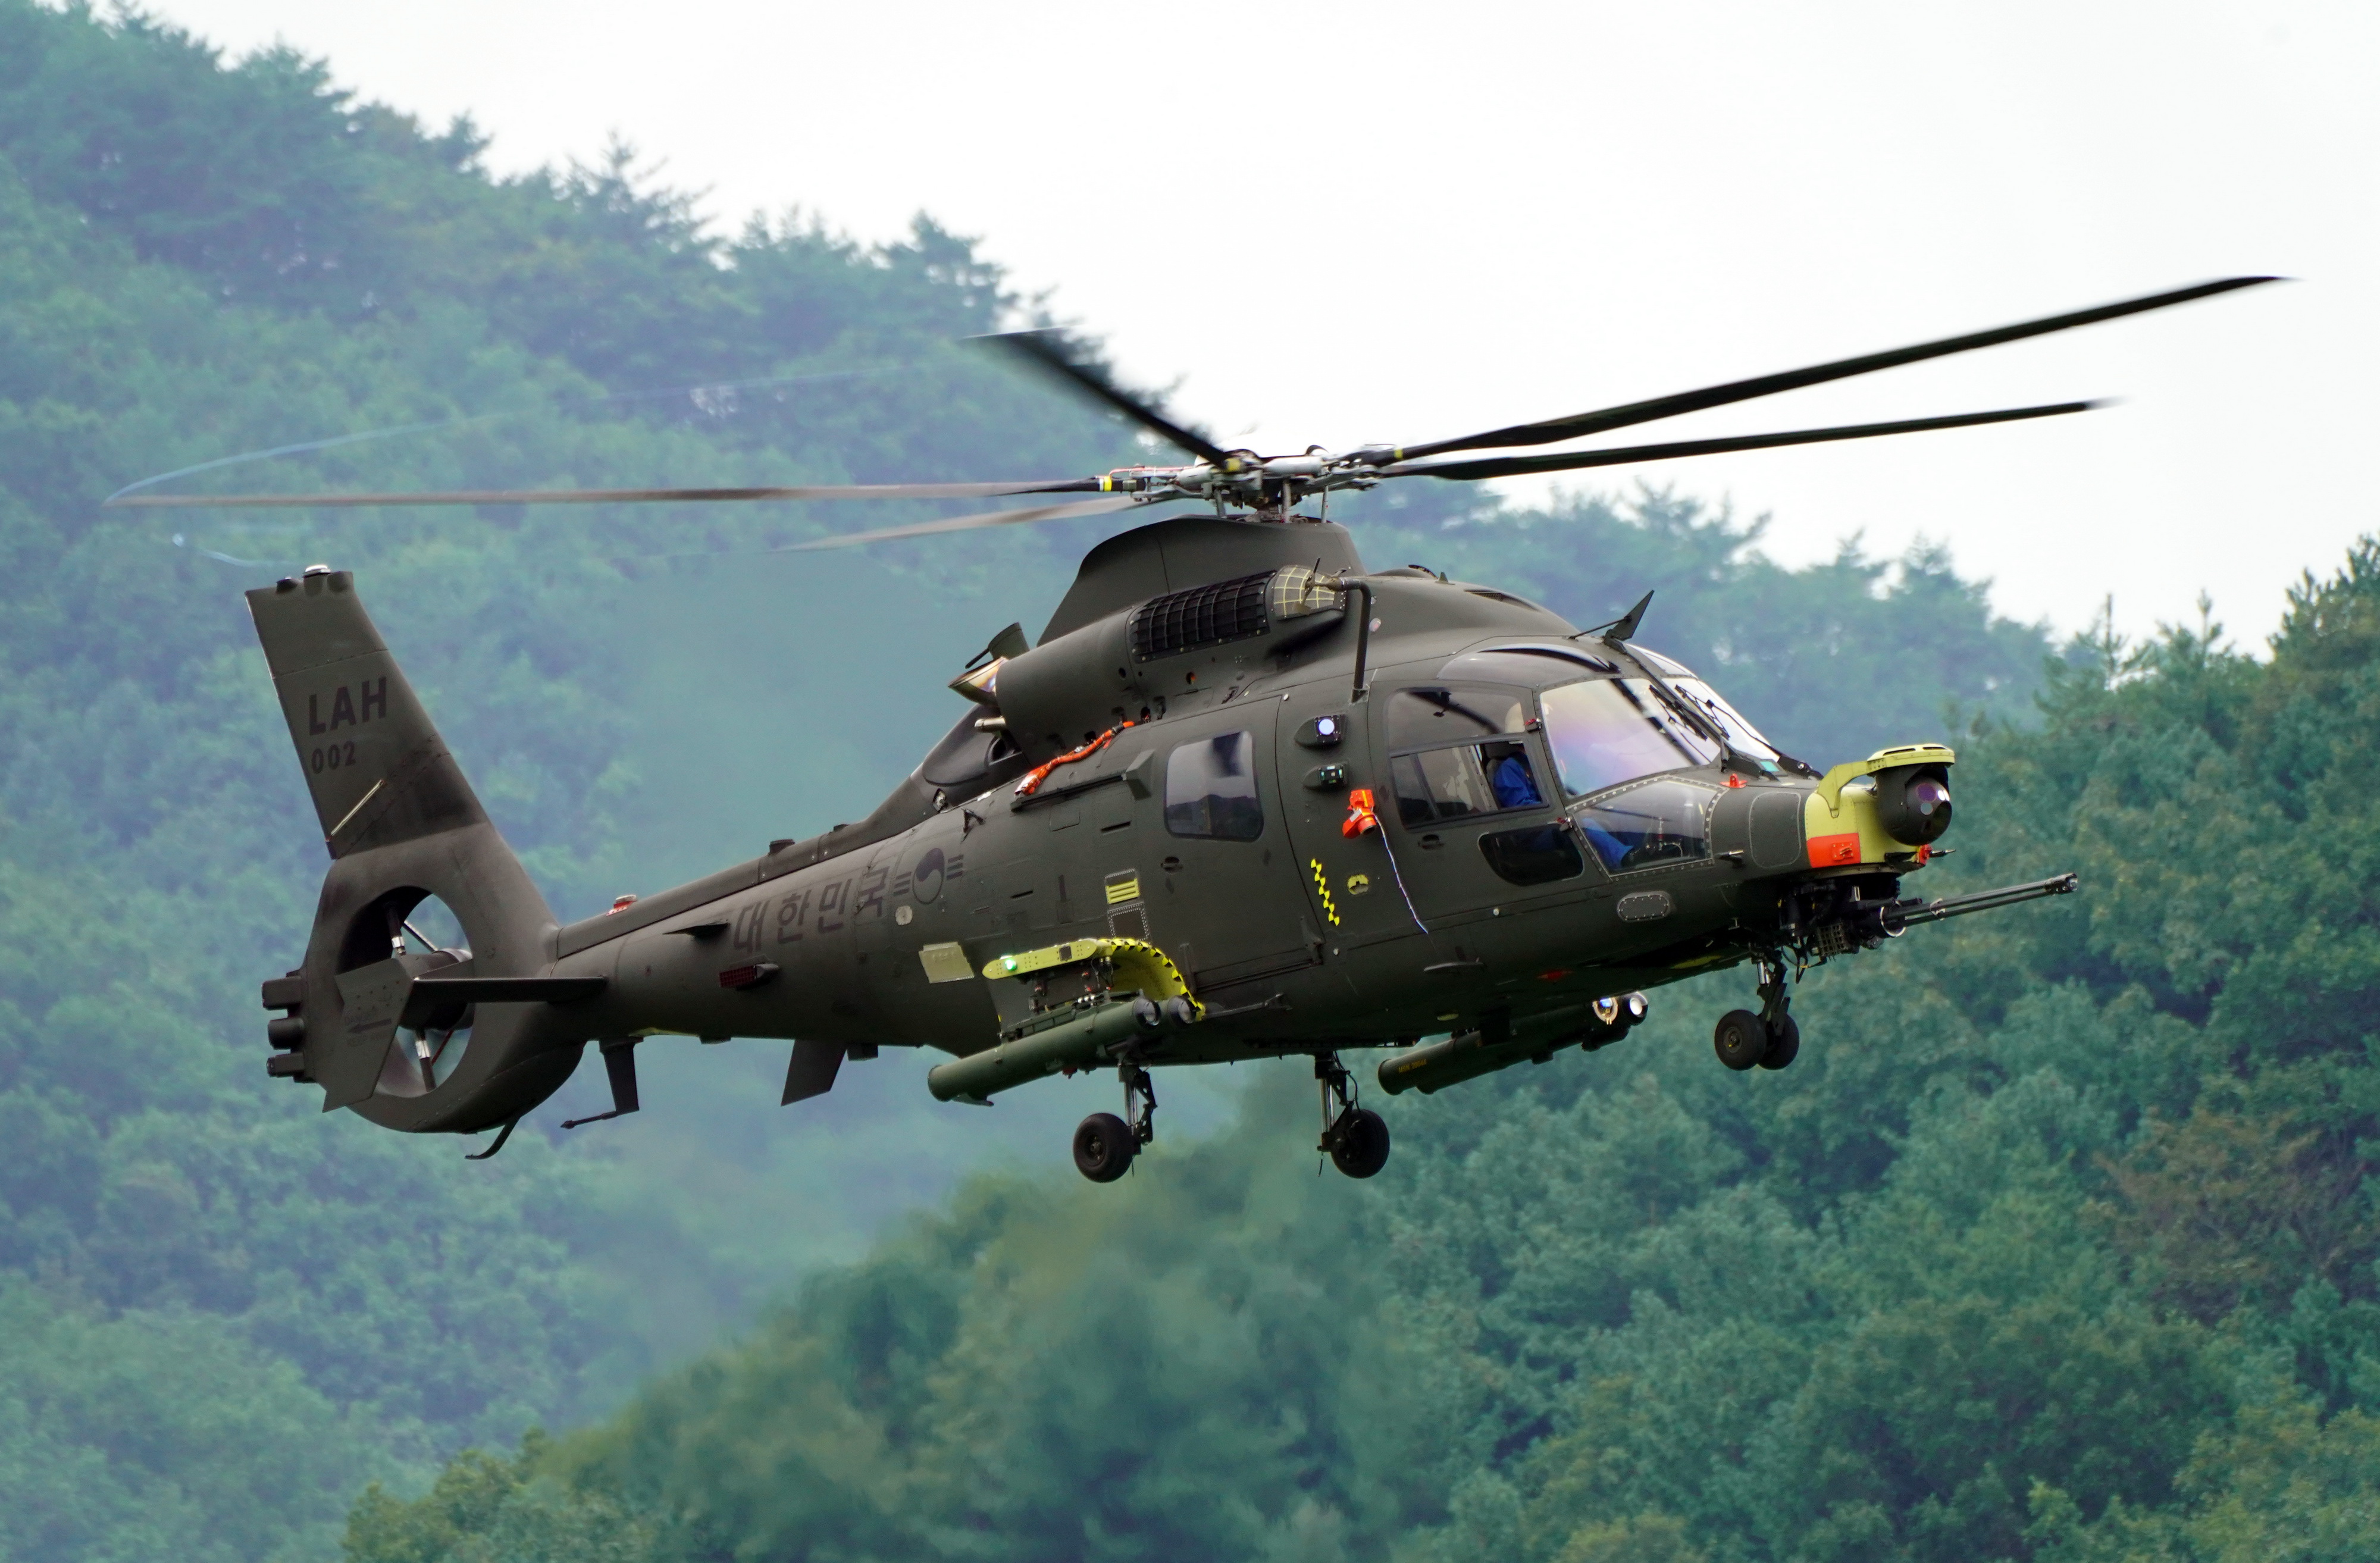 Corea del Sur compra 10 helicópteros de ataque ligeros KAI LAH, contrato por valor de 235.000.000 dólares